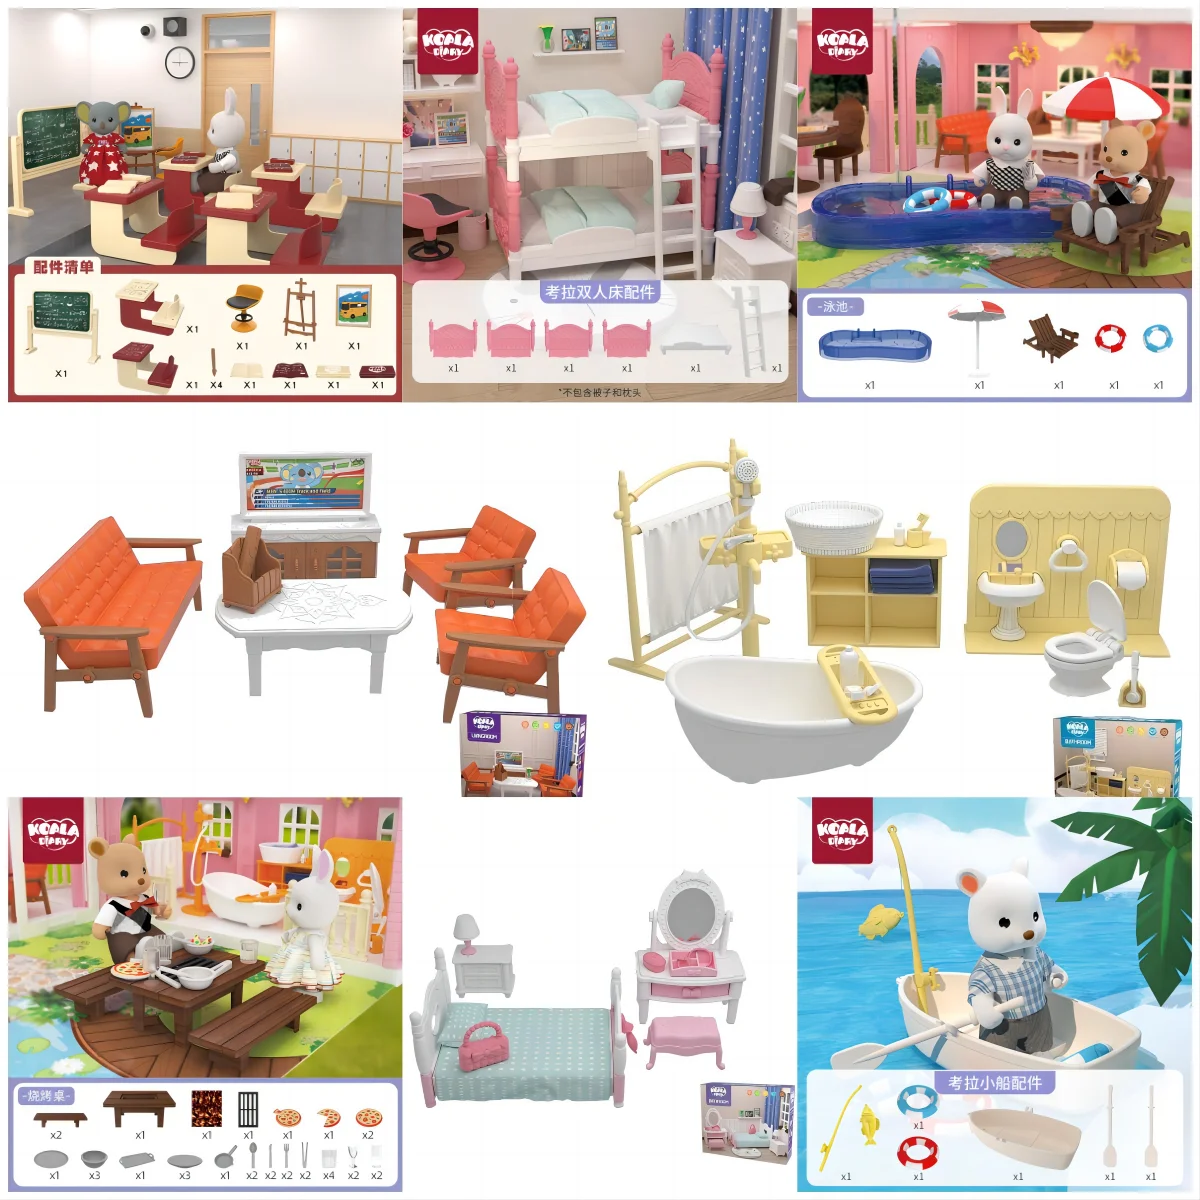 Original Toys Miniature Items Furniture Family Toys Dollhouse LivingRoom Bathroom Kitchen Set Pretend Creative Ideas Kids Toys